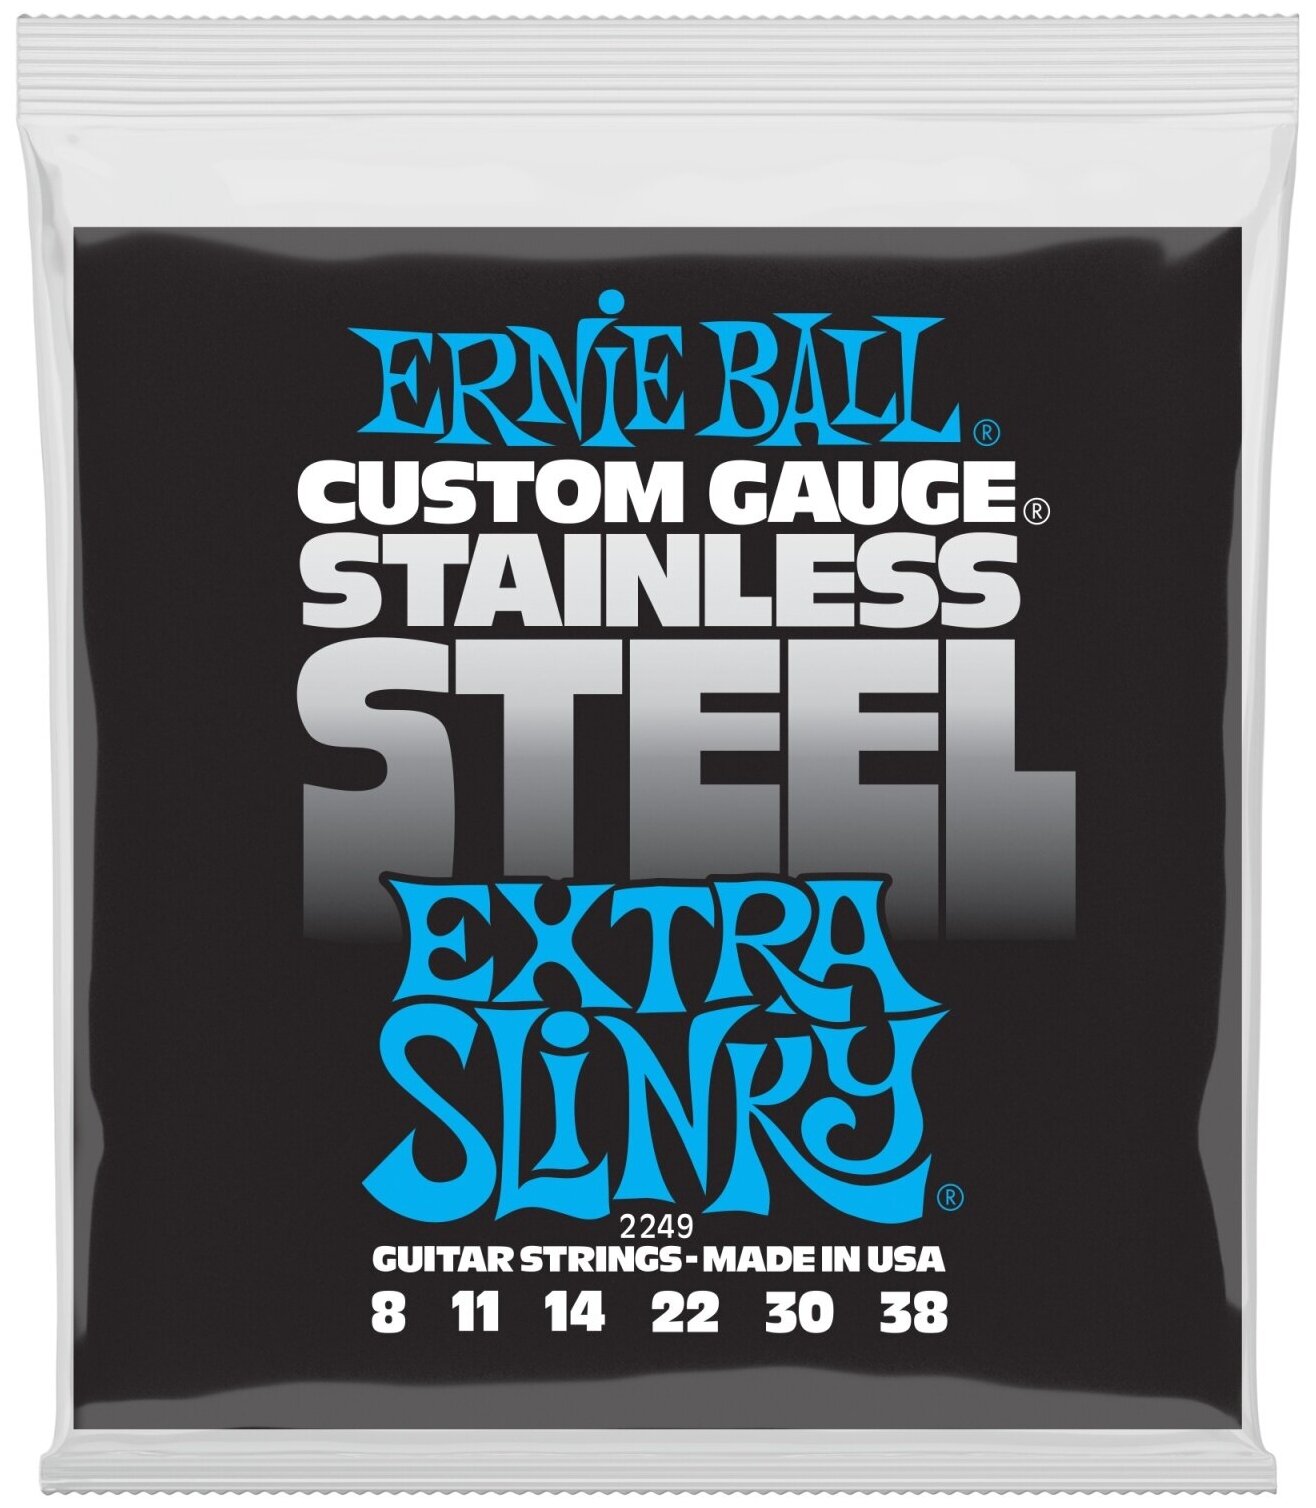 ERNIE BALL 2249 Stainless Steel Slinky Extra 8-38 Струны для электрогитары